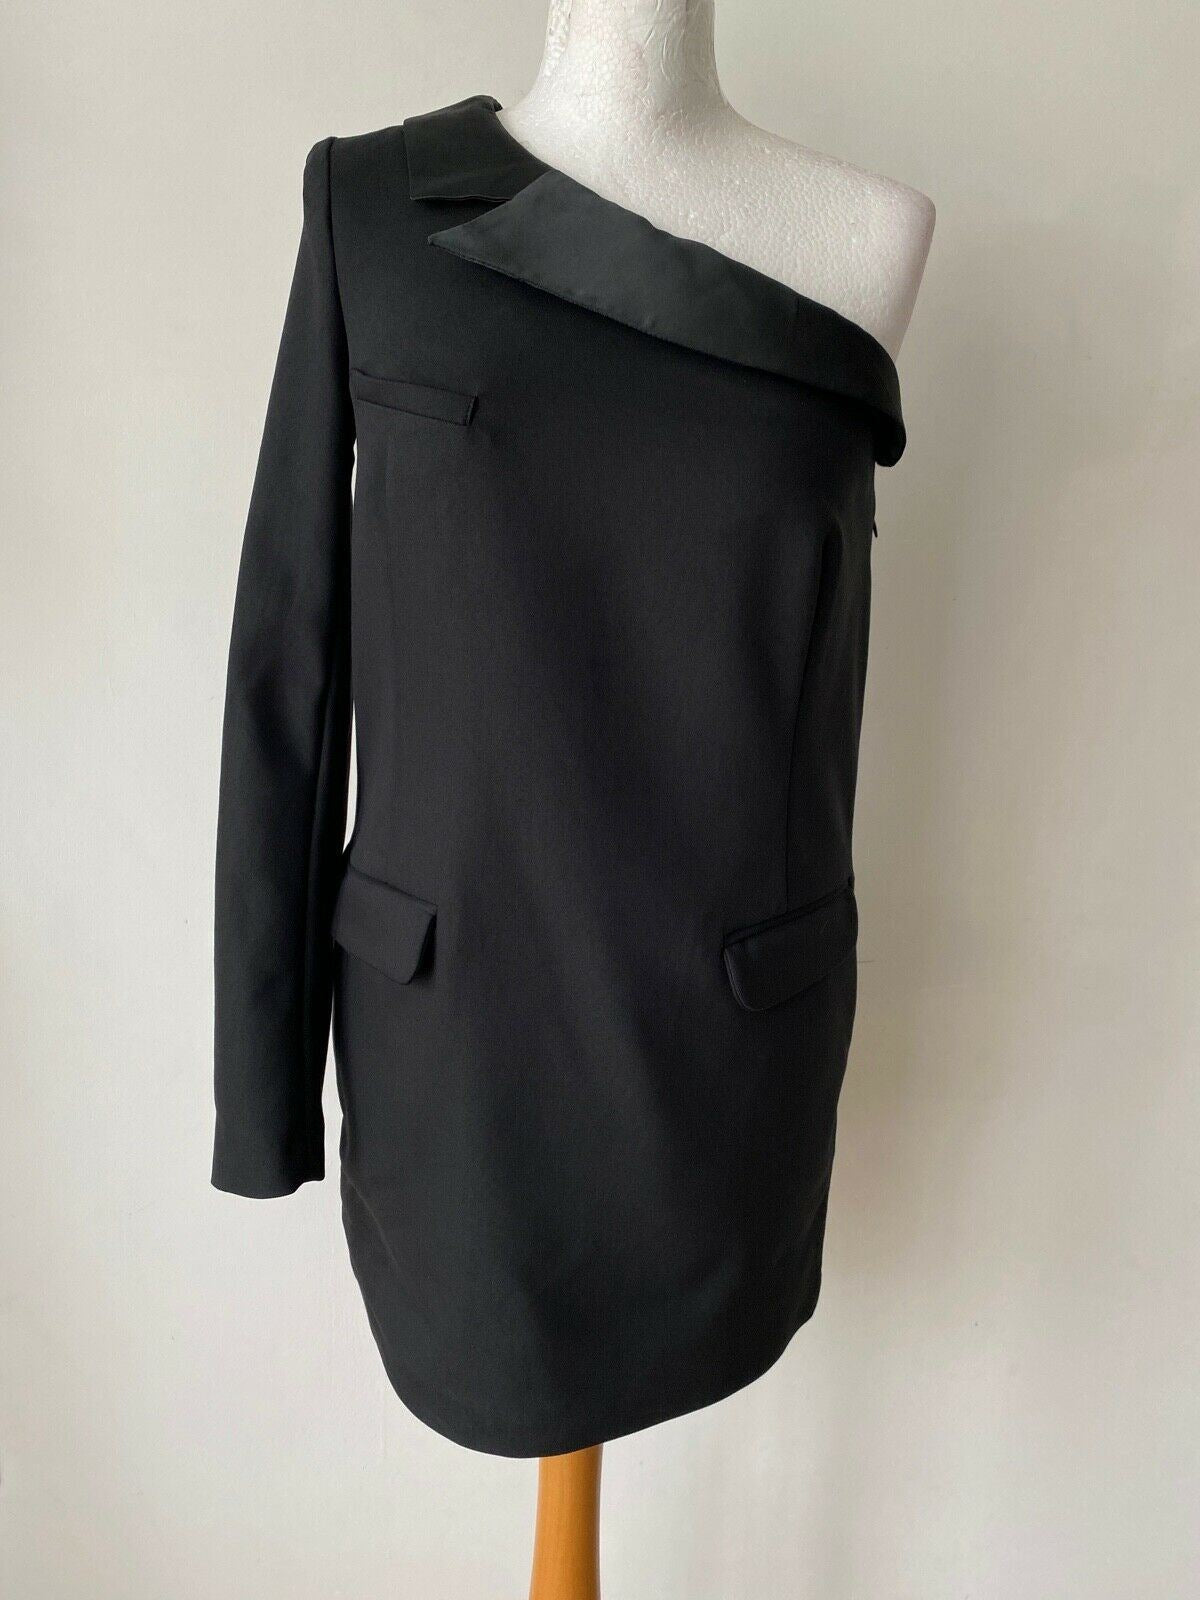 La Redoute Madam Wanda Nylon Black Tailored One Shoulder Dress Size 10